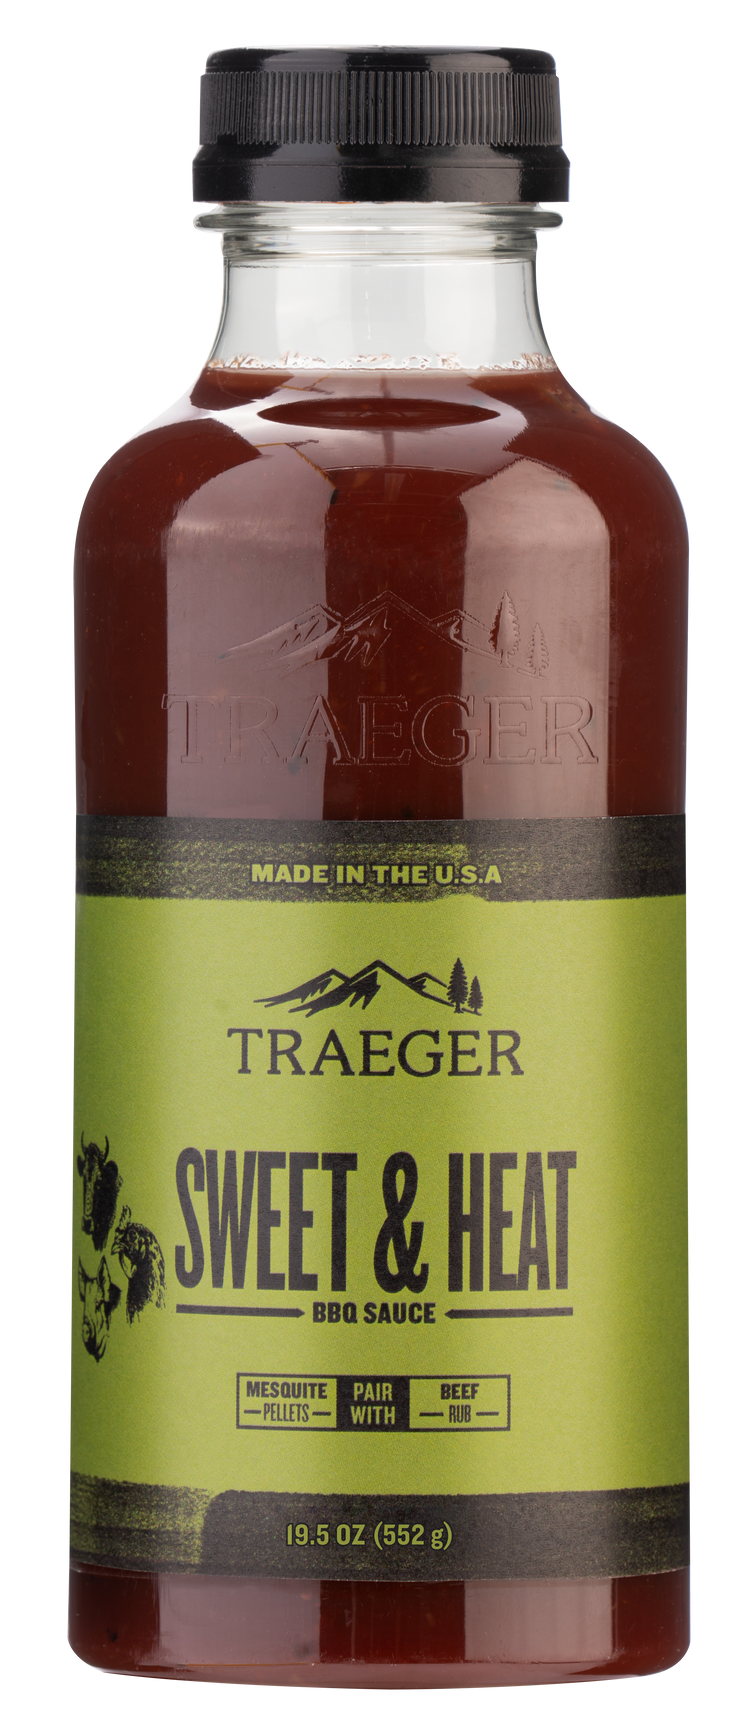 TRAEGER SWEET & HEAT BBQ SAUCE